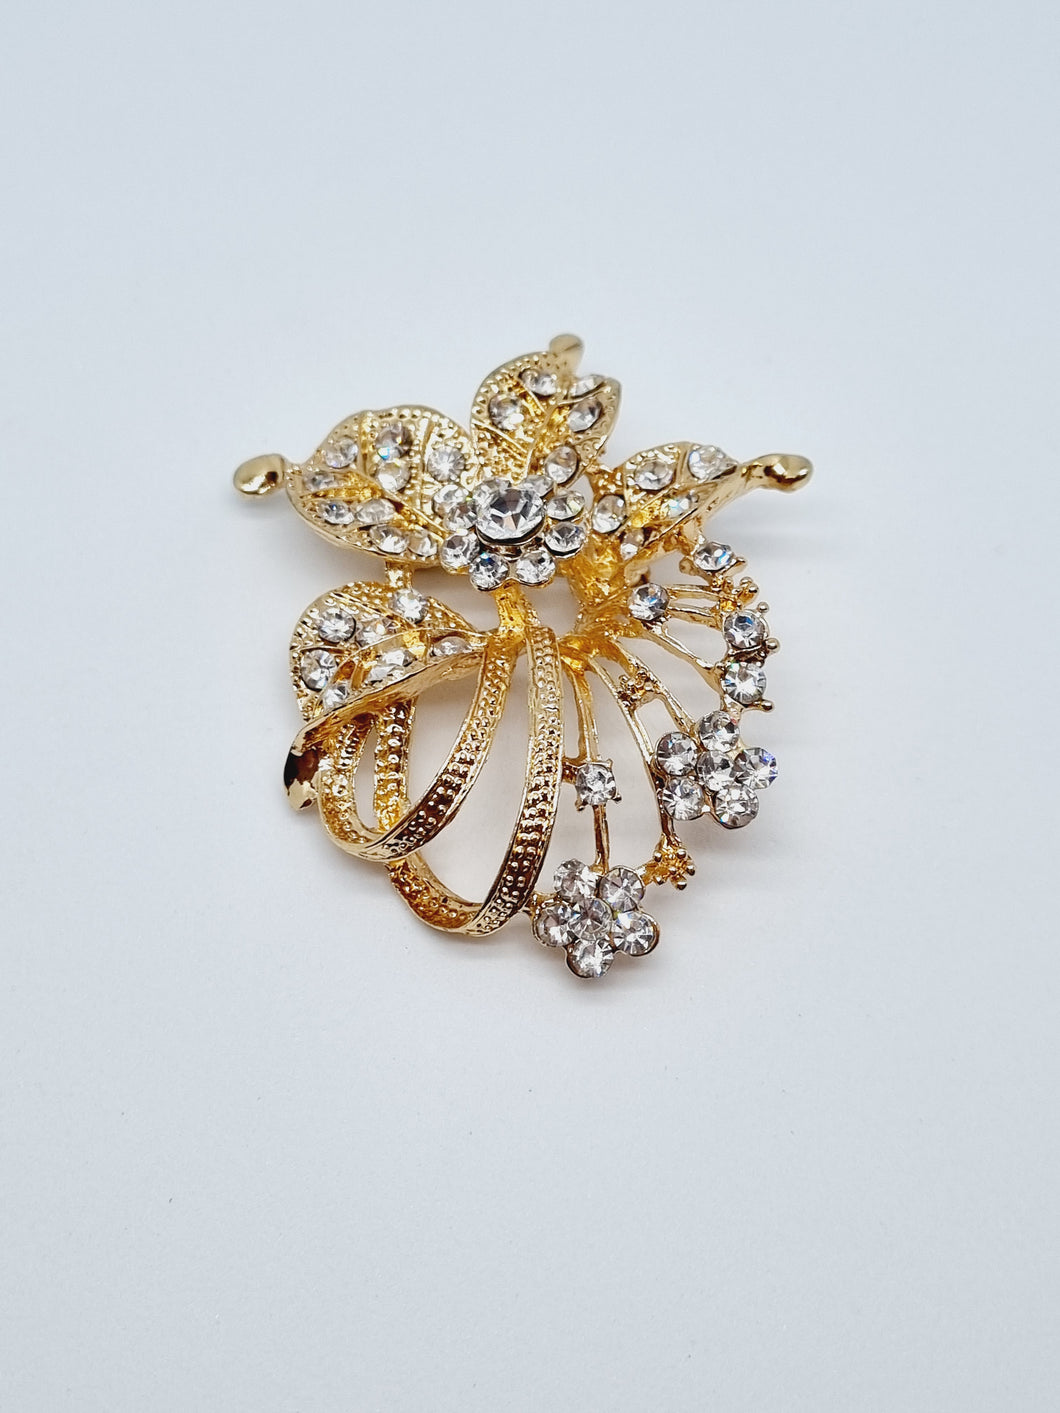 Gold leaf crystal Brooch – Free postage in Australia